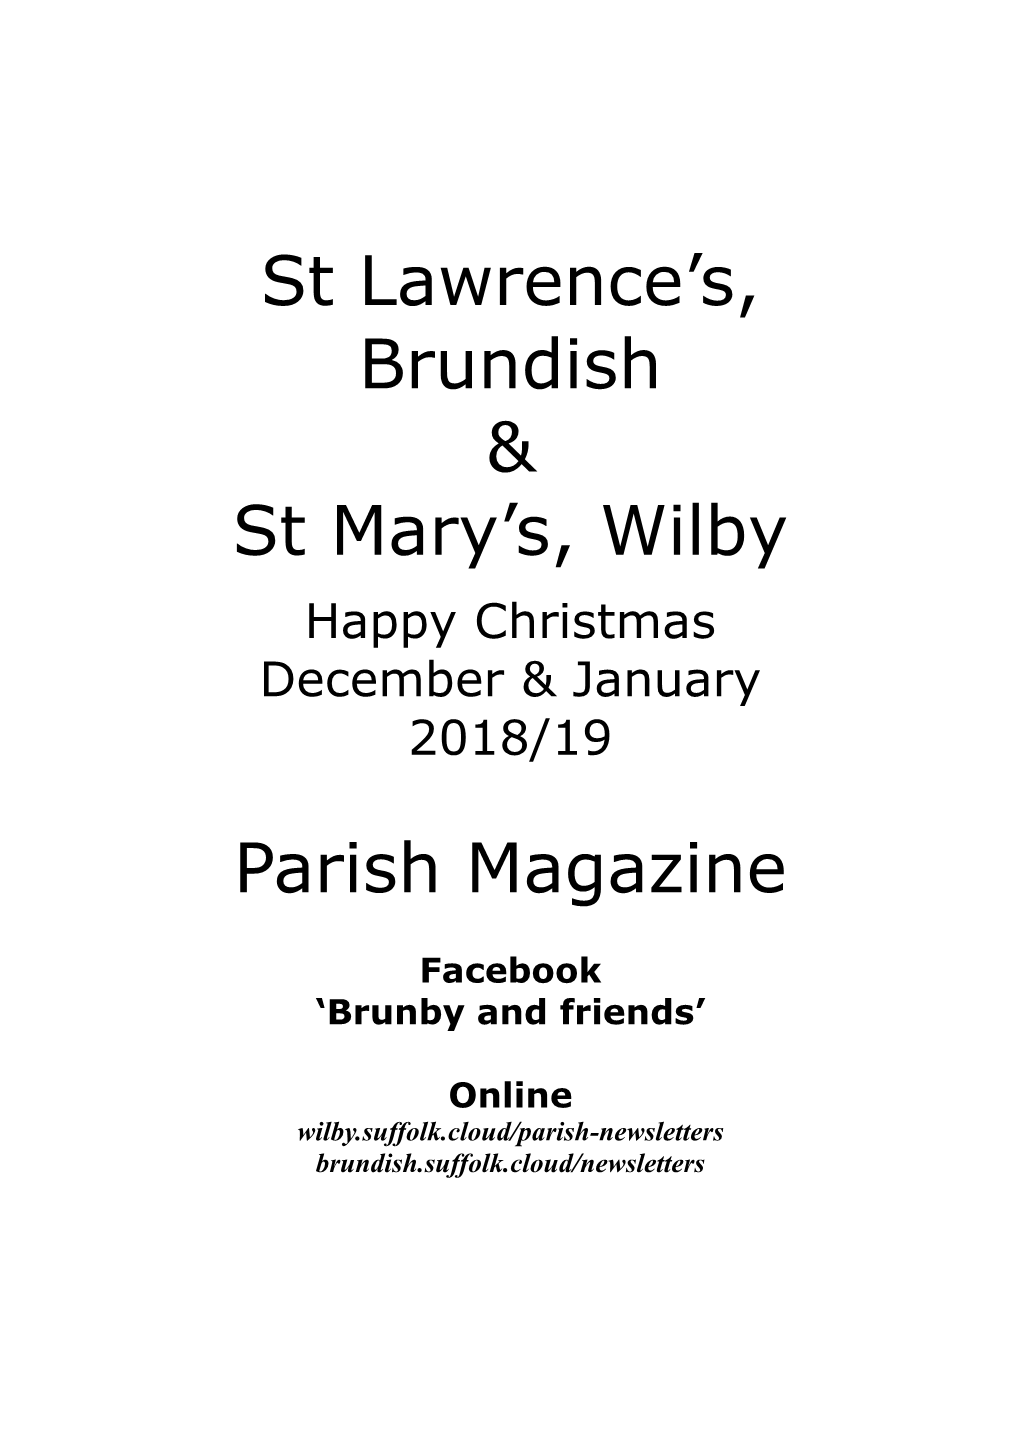 St Lawrence's, Brundish & St Mary's, Wilby Parish Magazine